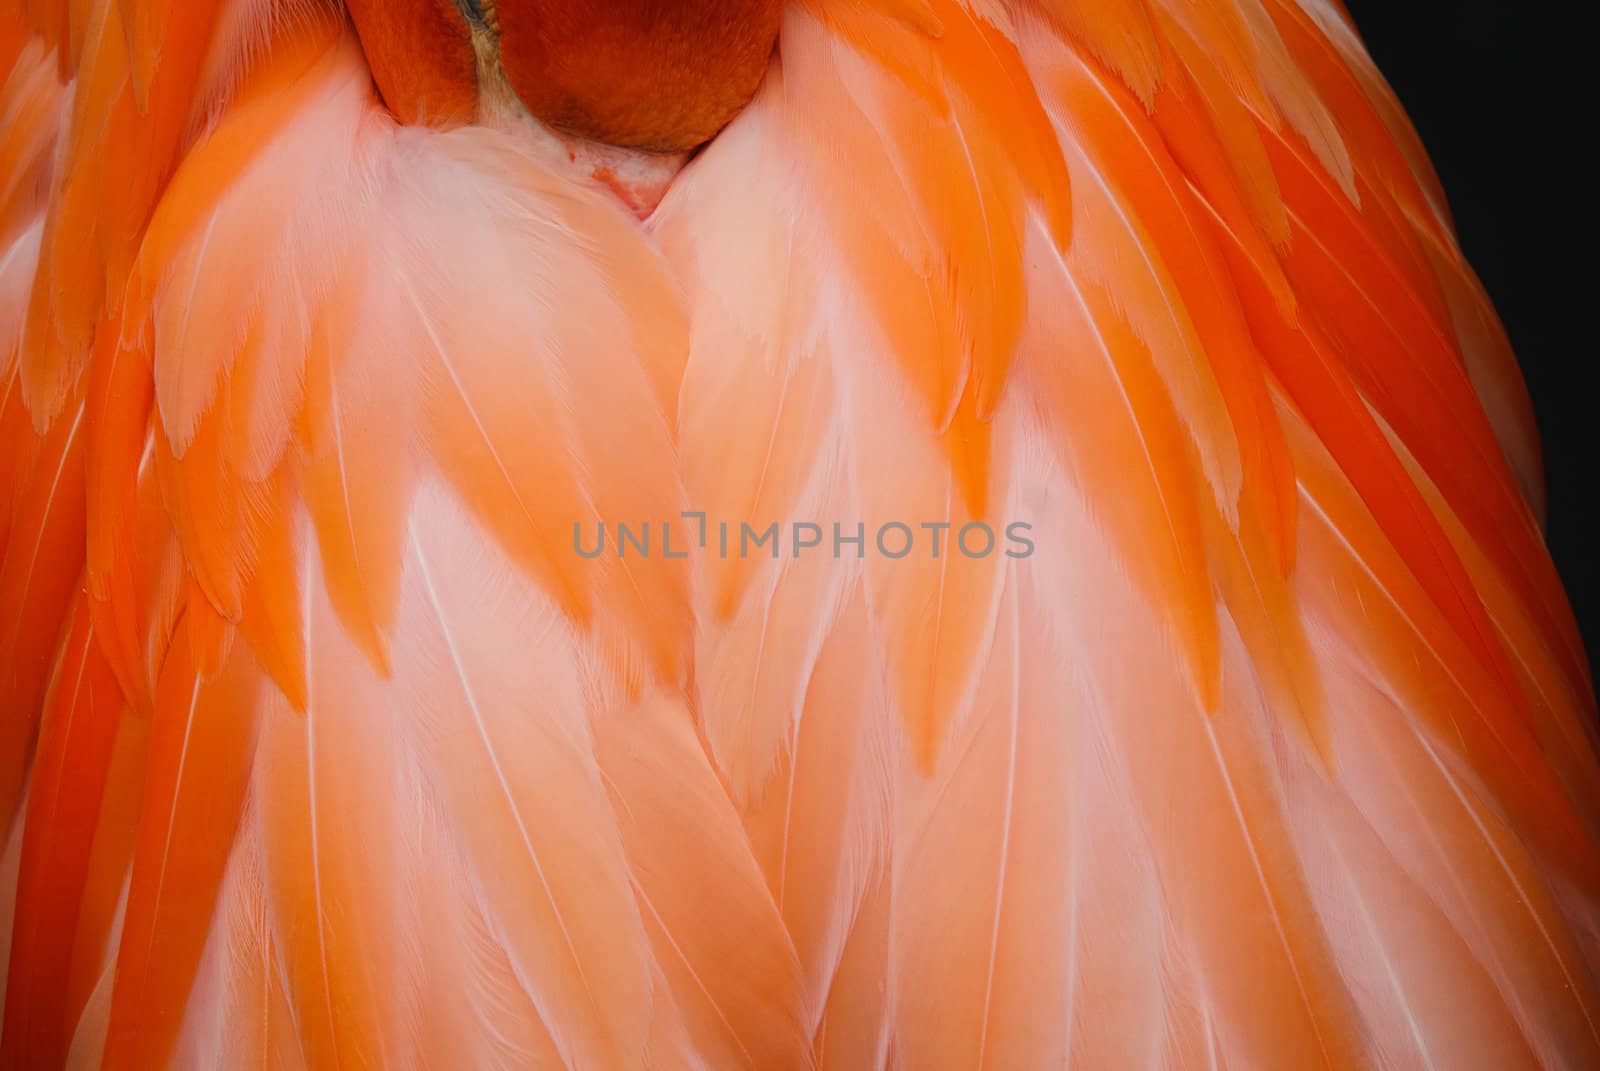 Flamingo by nialat